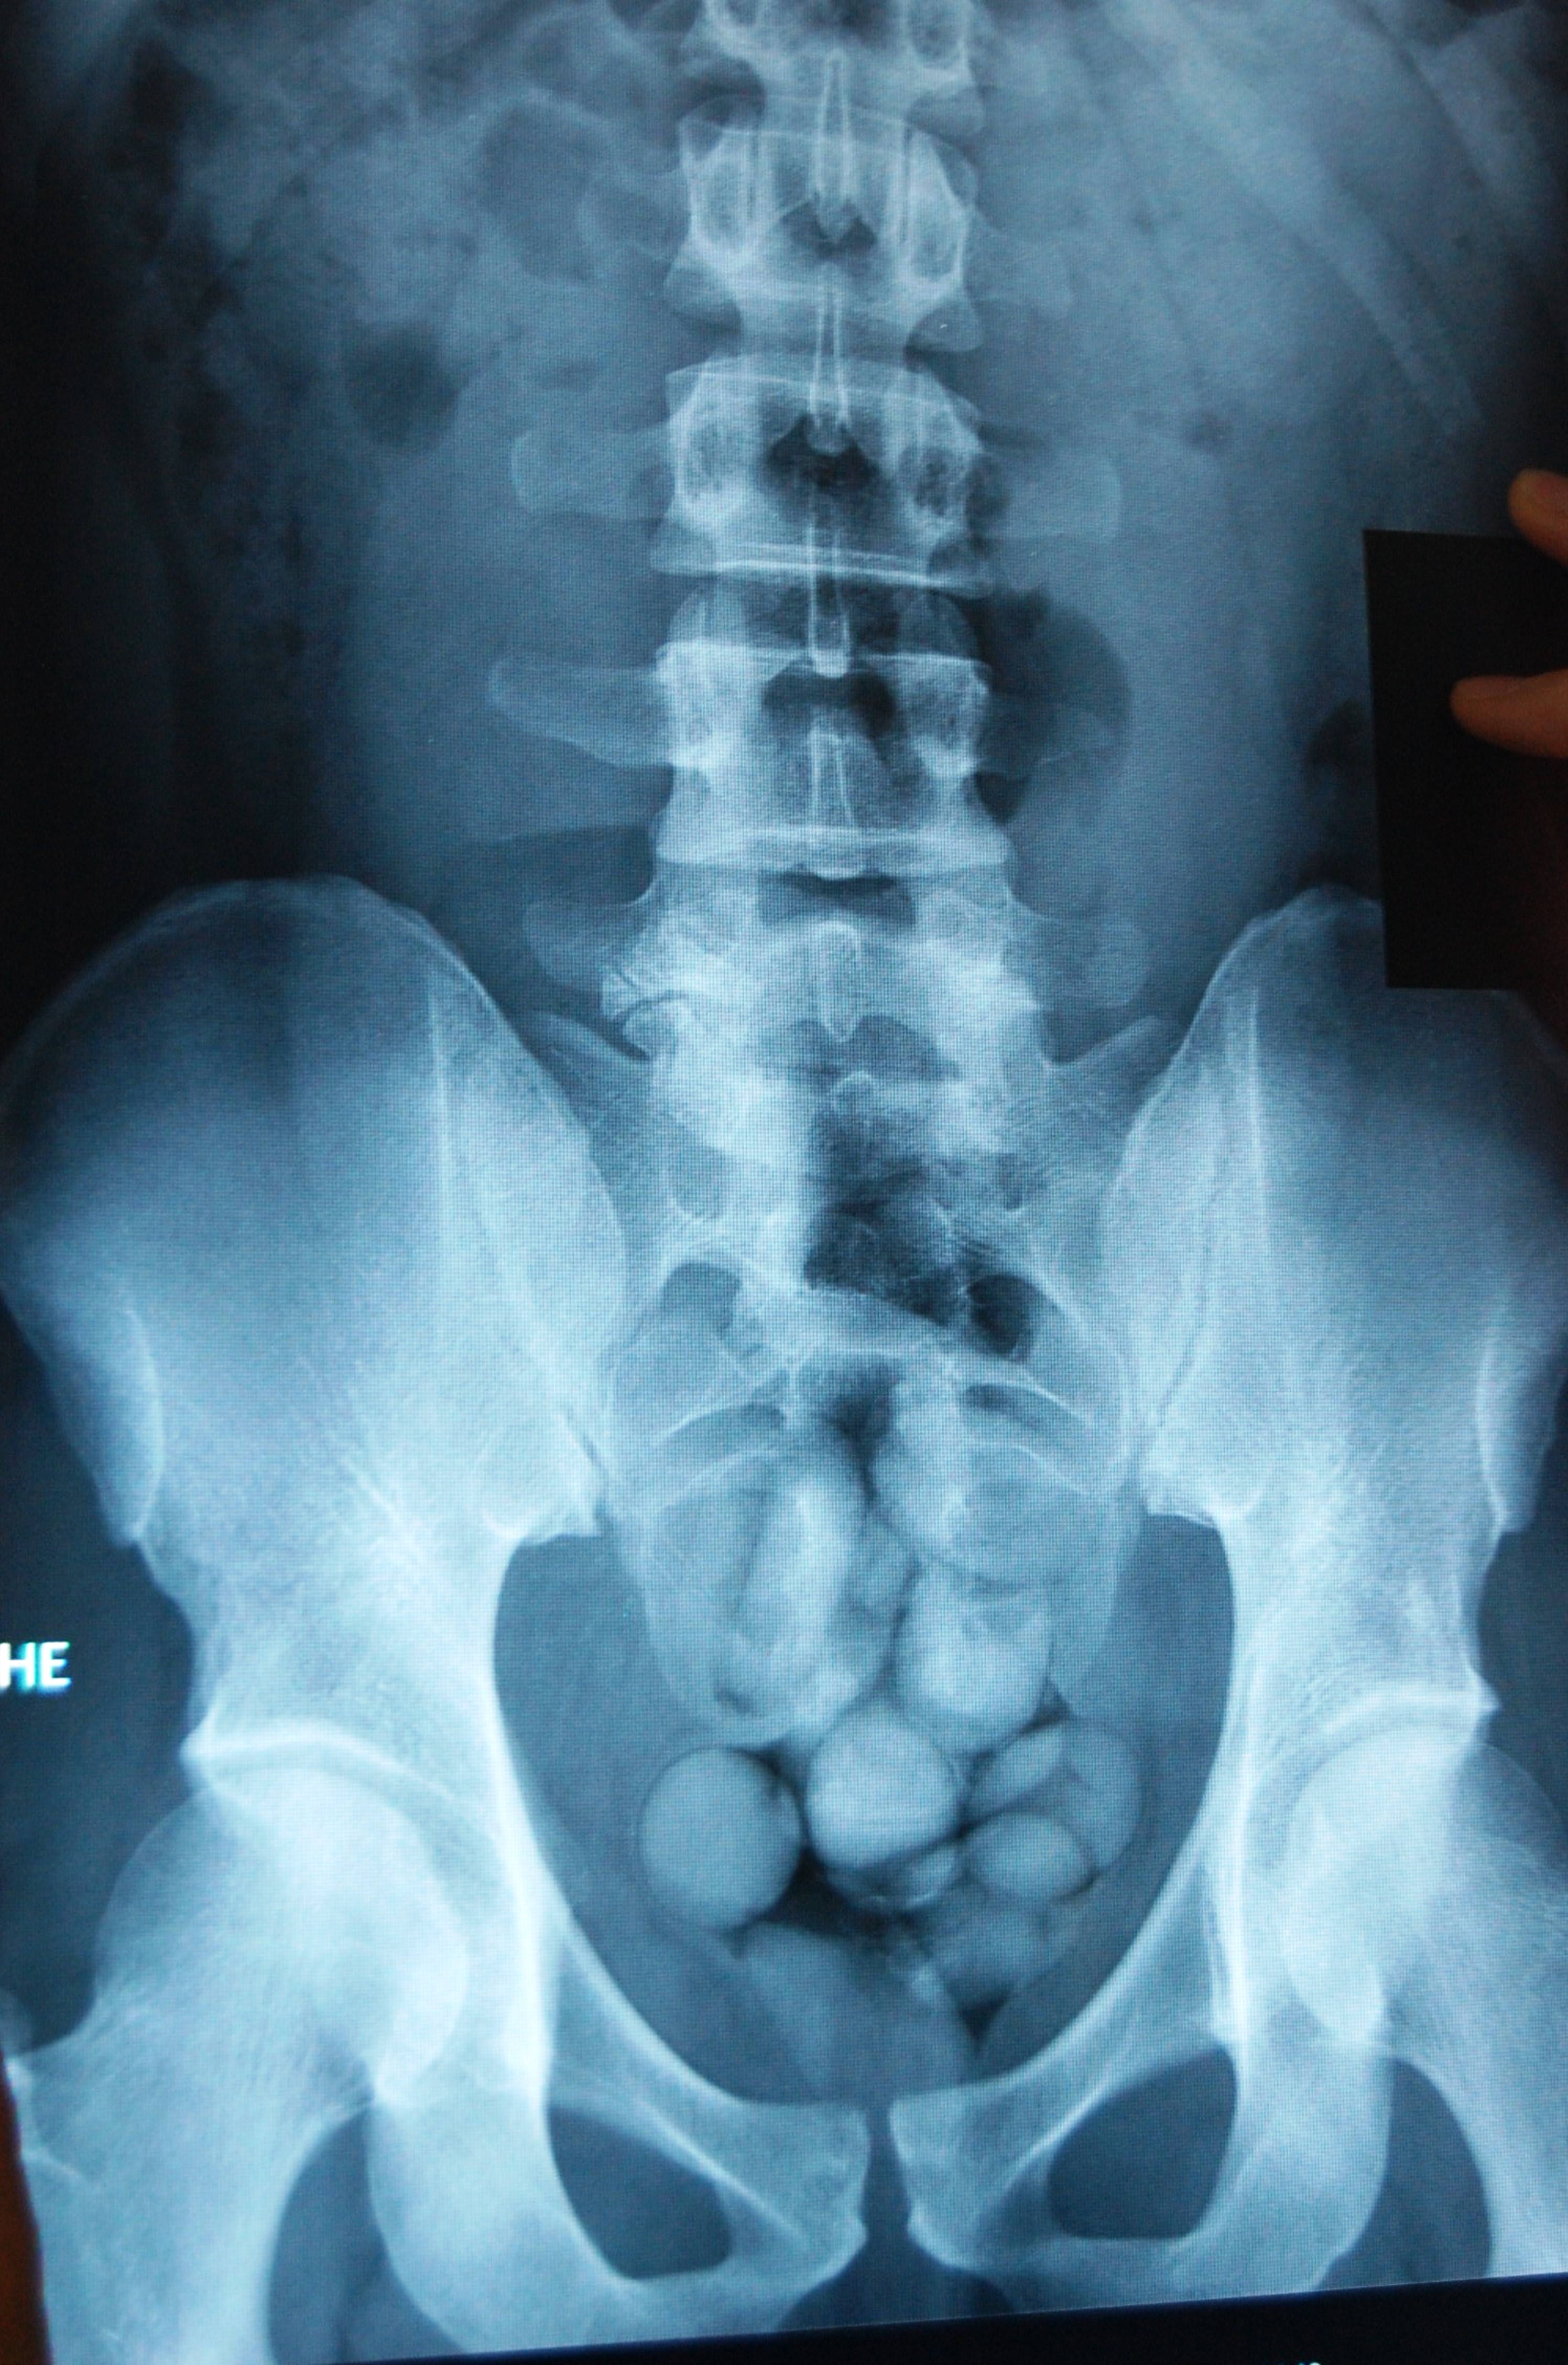 Röntgenbild eines Drogenkuriers - Bodypacker